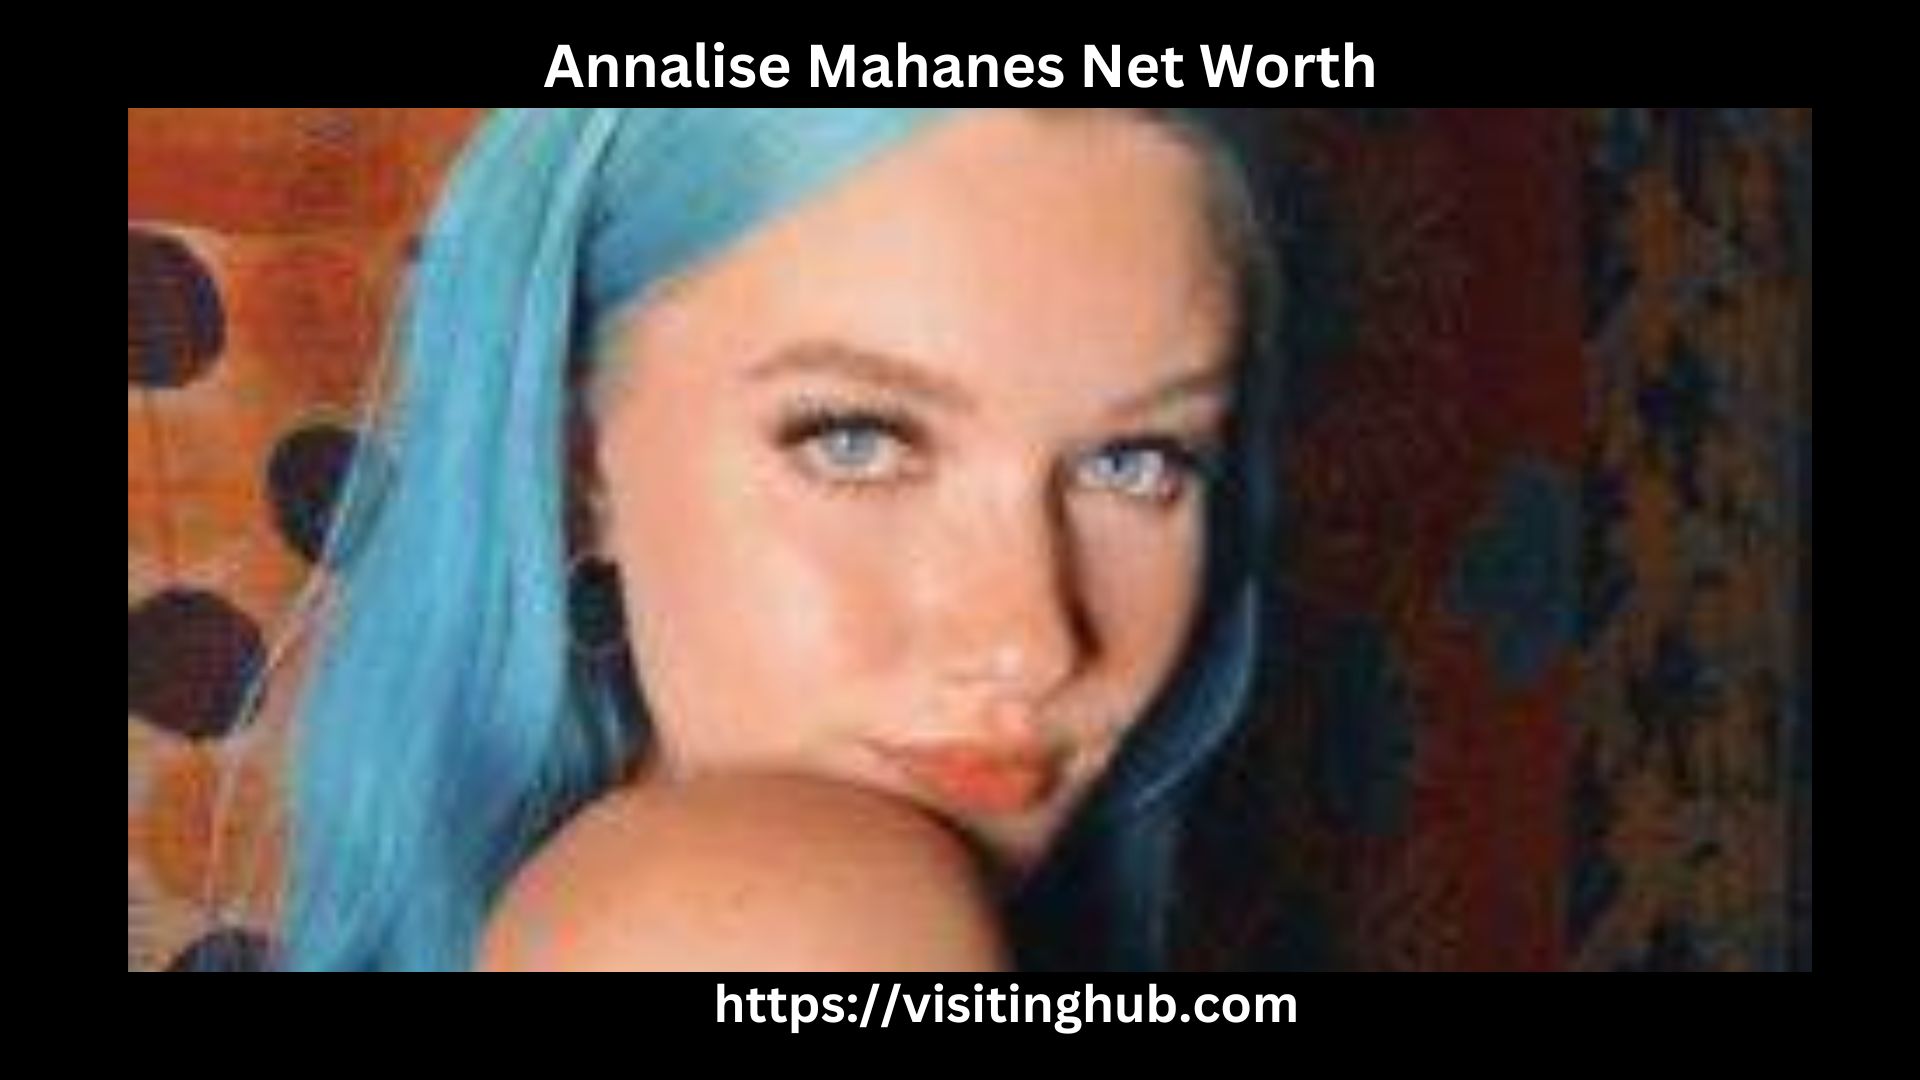 Annalise Mahanes Net Worth